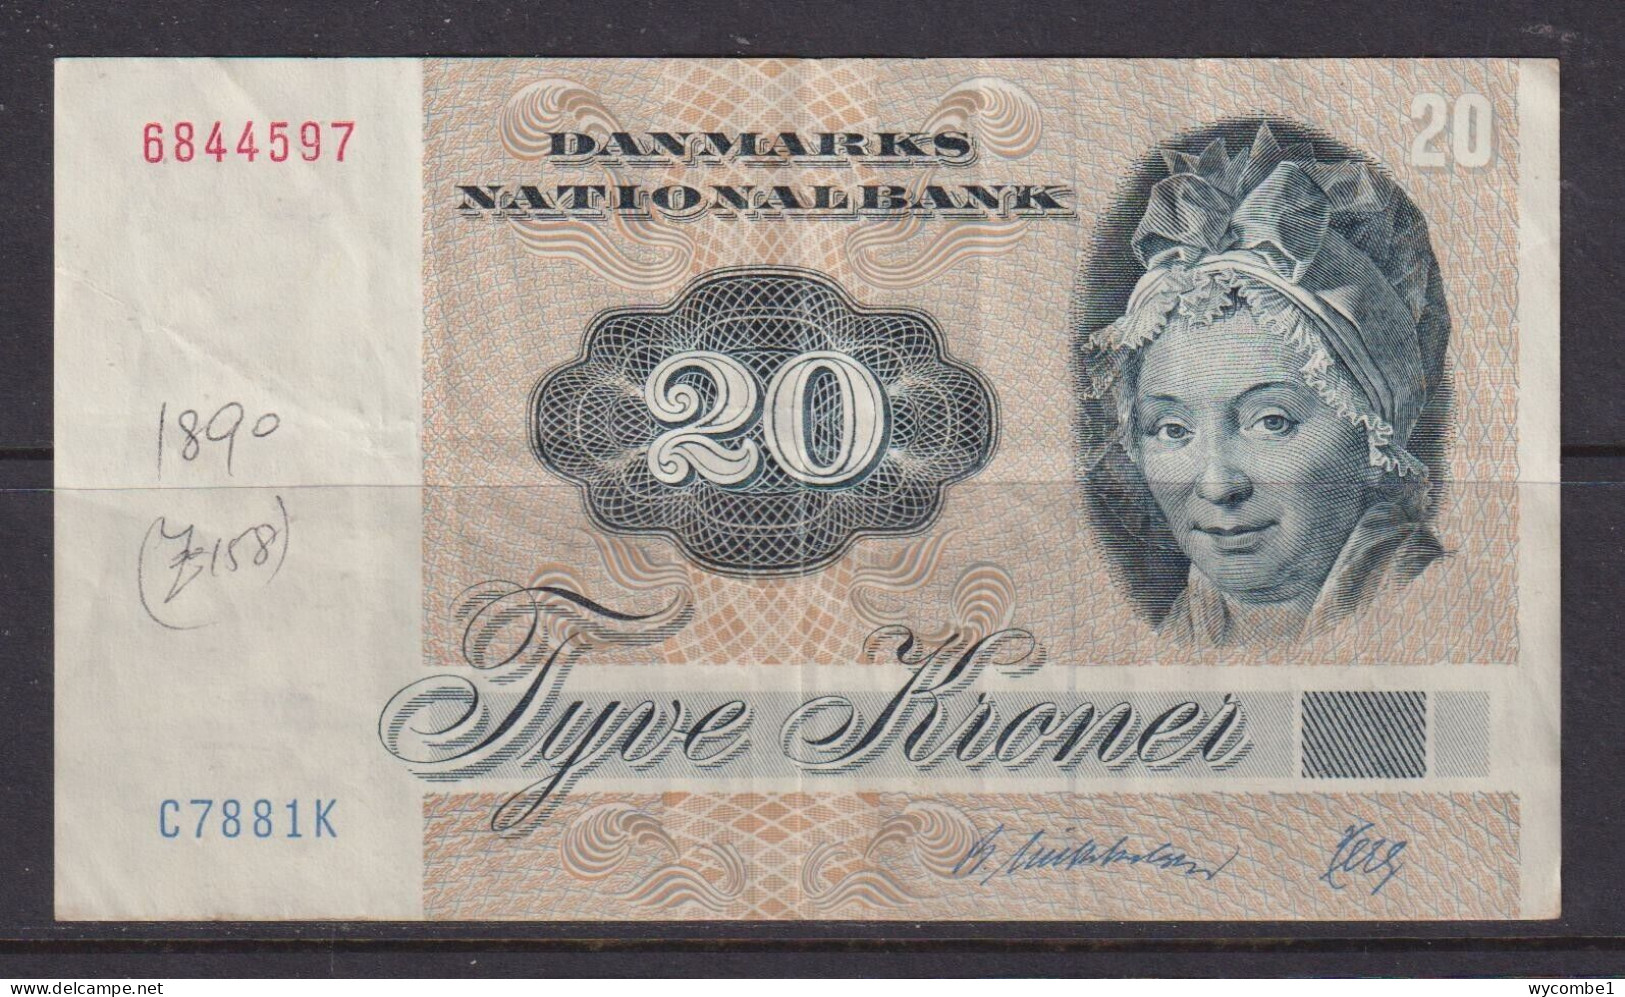 DENMARK - 1972 20 Kroner Circulated Banknote - Danemark